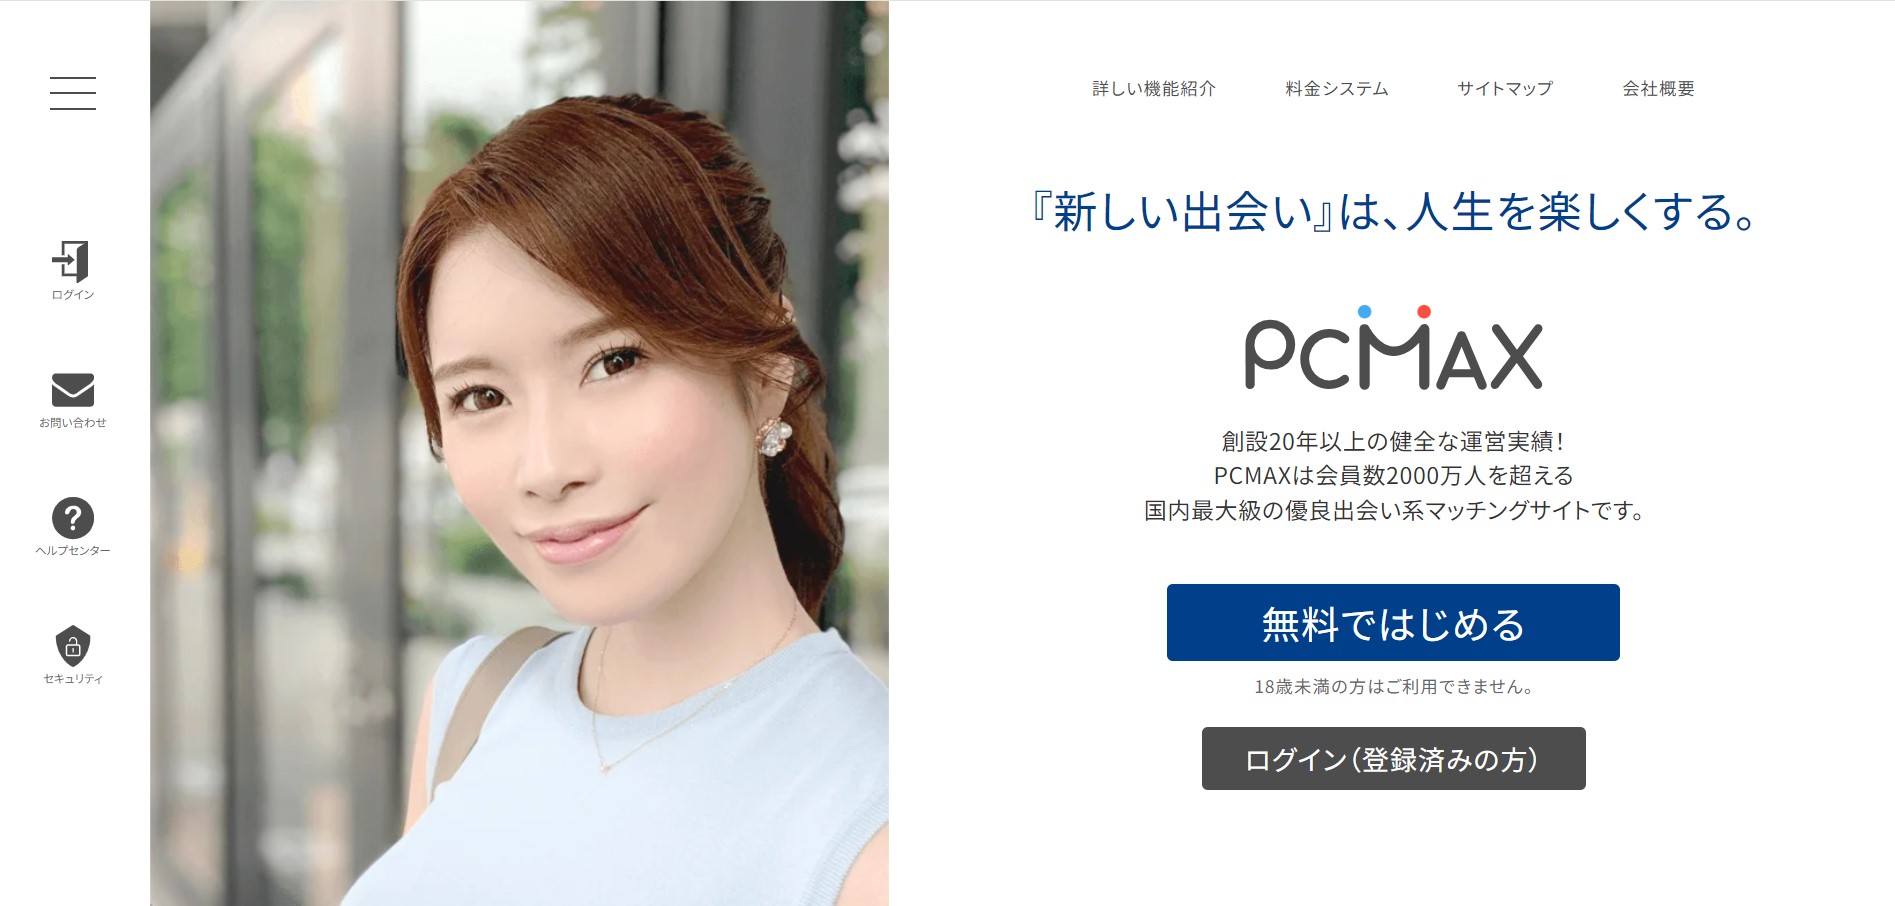 PCMAX公式サイト12月